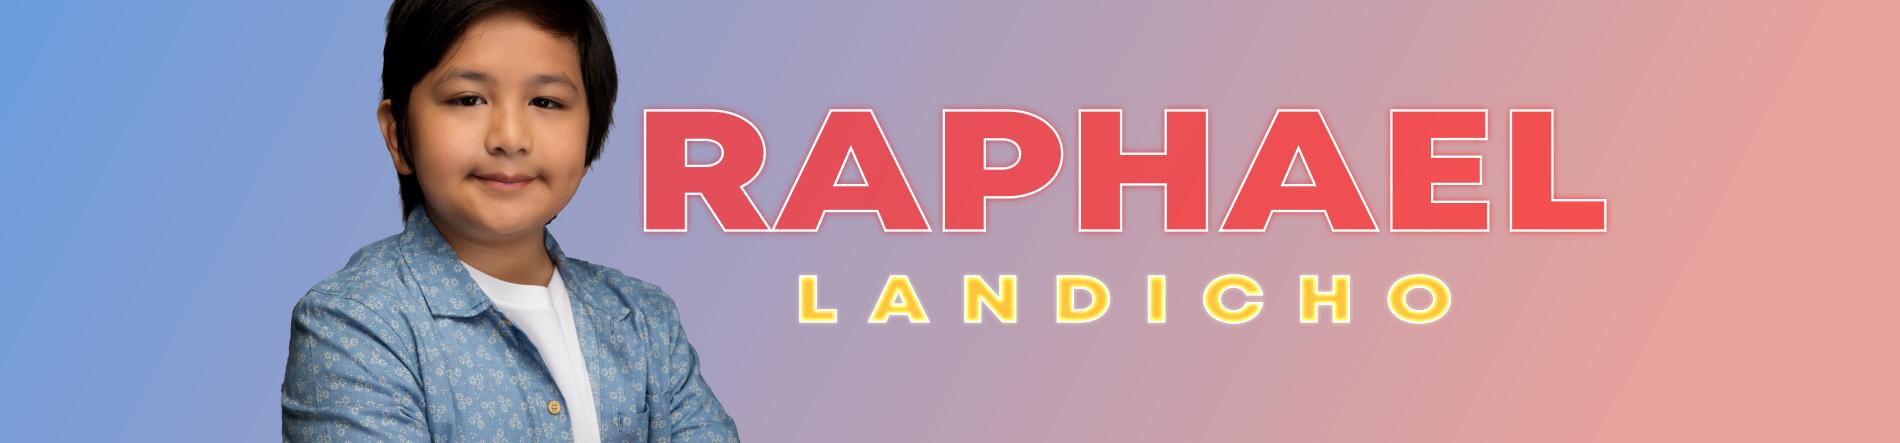 Raphael Landicho Desktop Banner